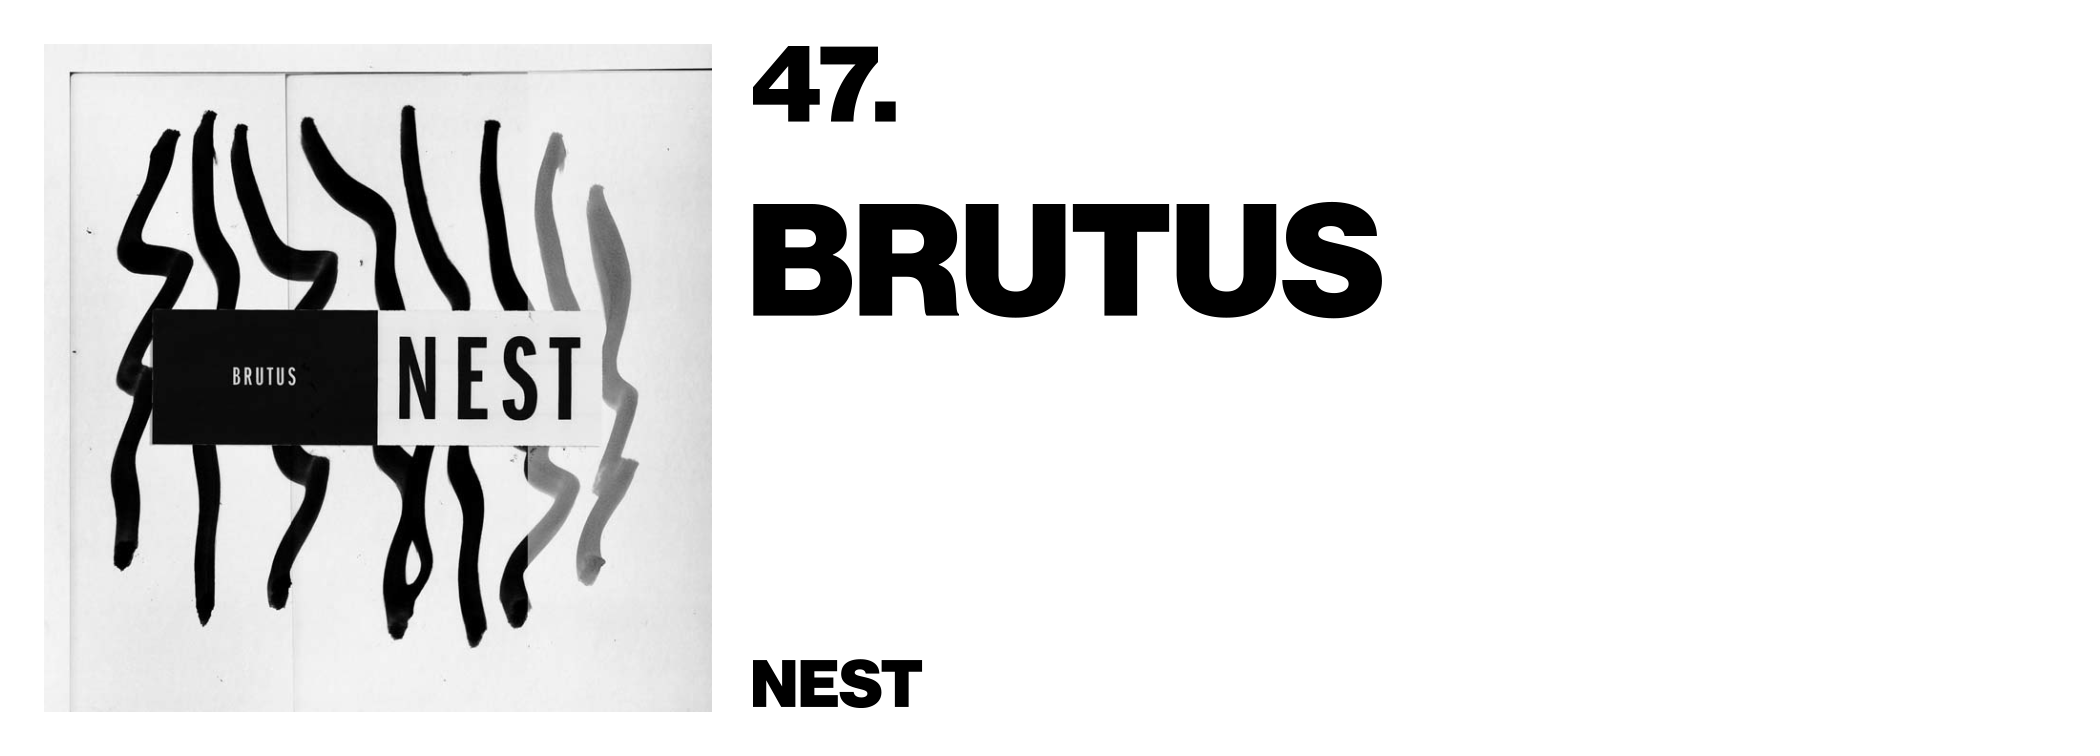 1575998252578-47-Brutus-Nest